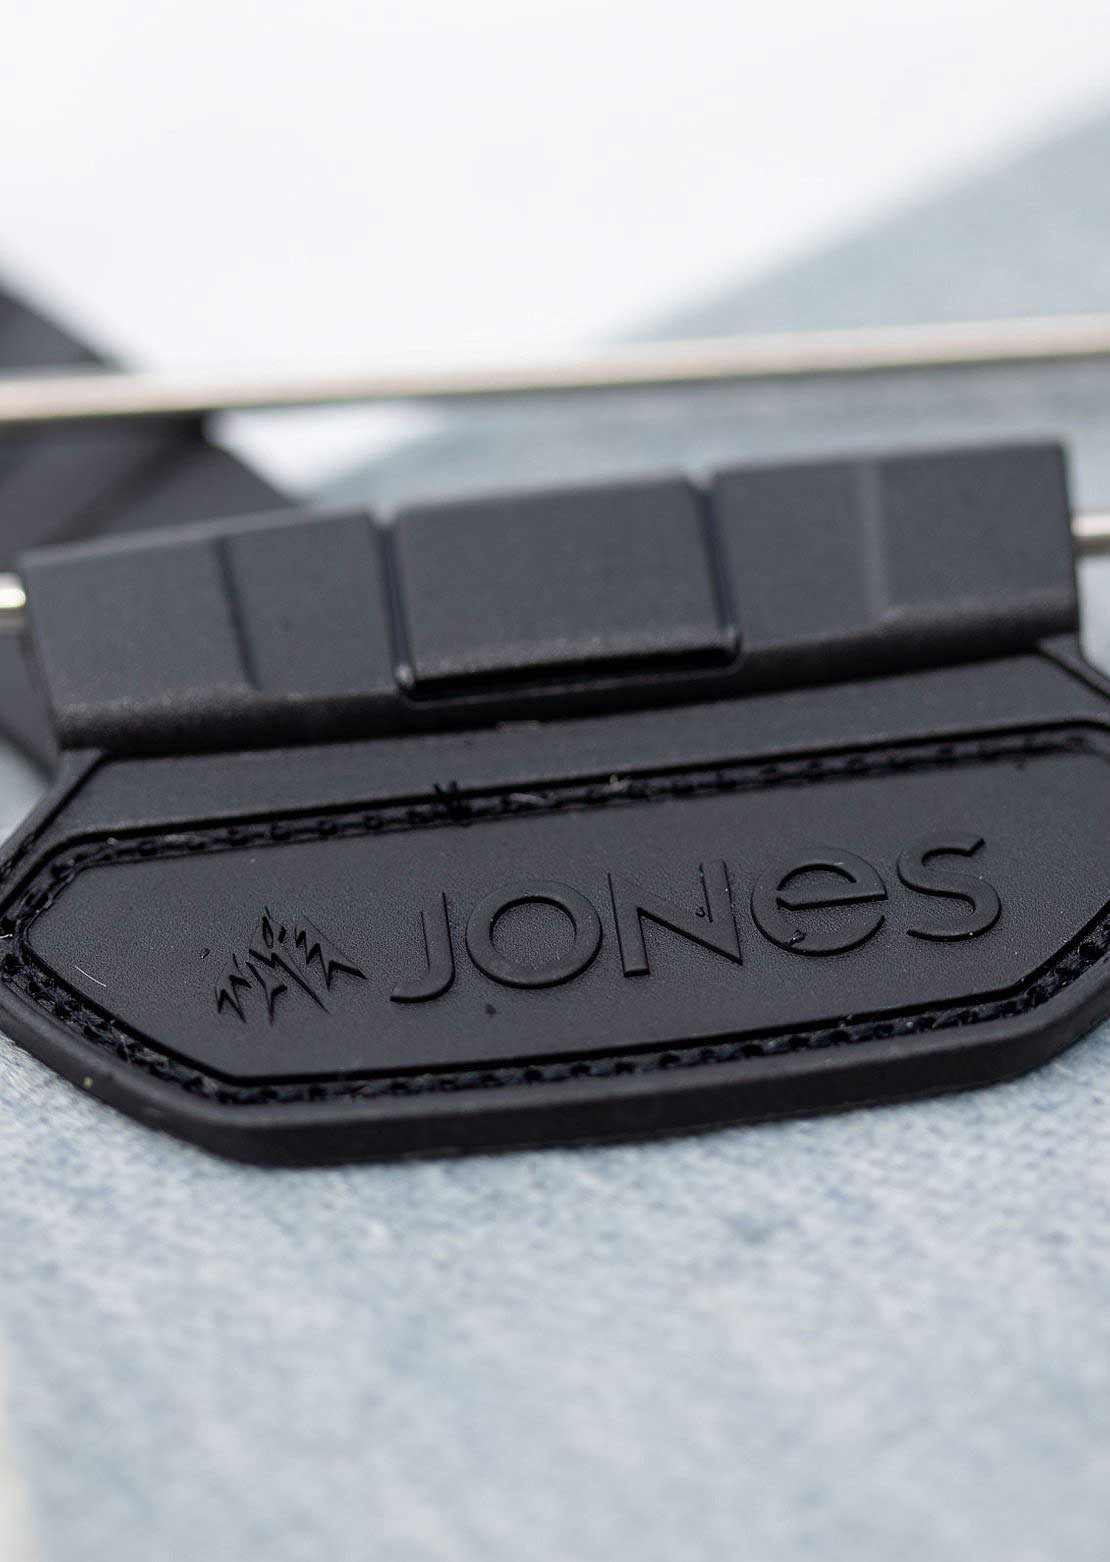 Jones Nomad Spliboard Skins w/ Quick Tension Tail Clip Grey